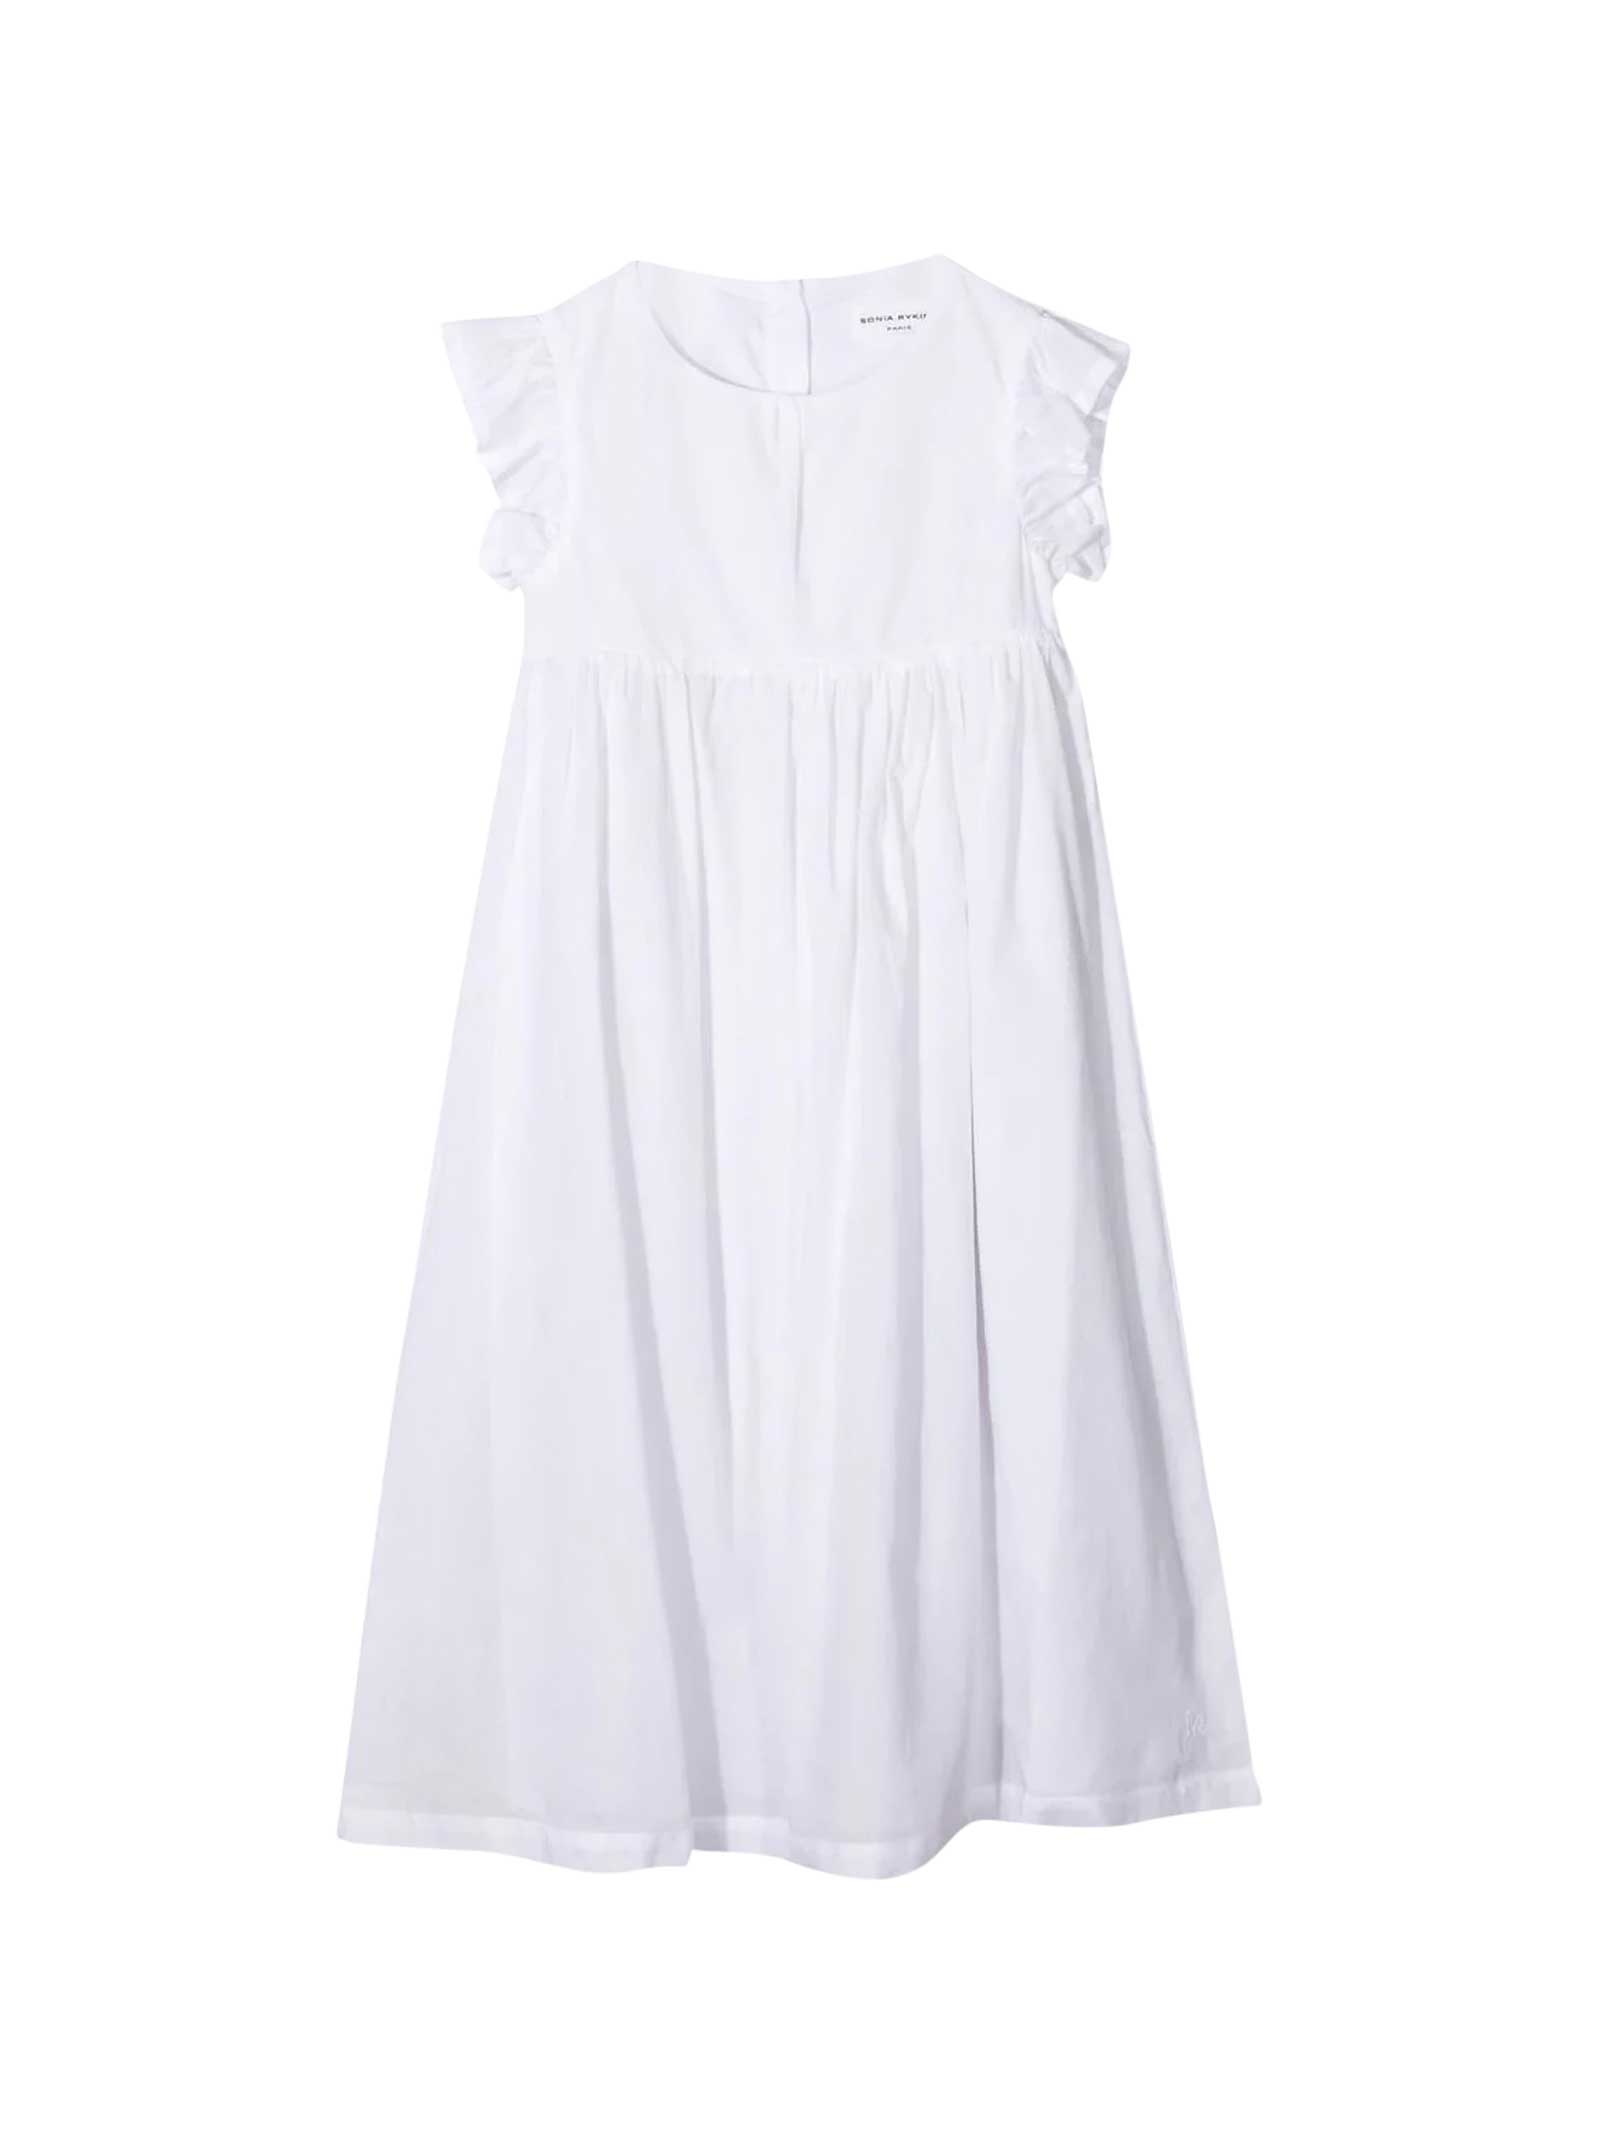 Sonia Rykiel Enfant White Dress